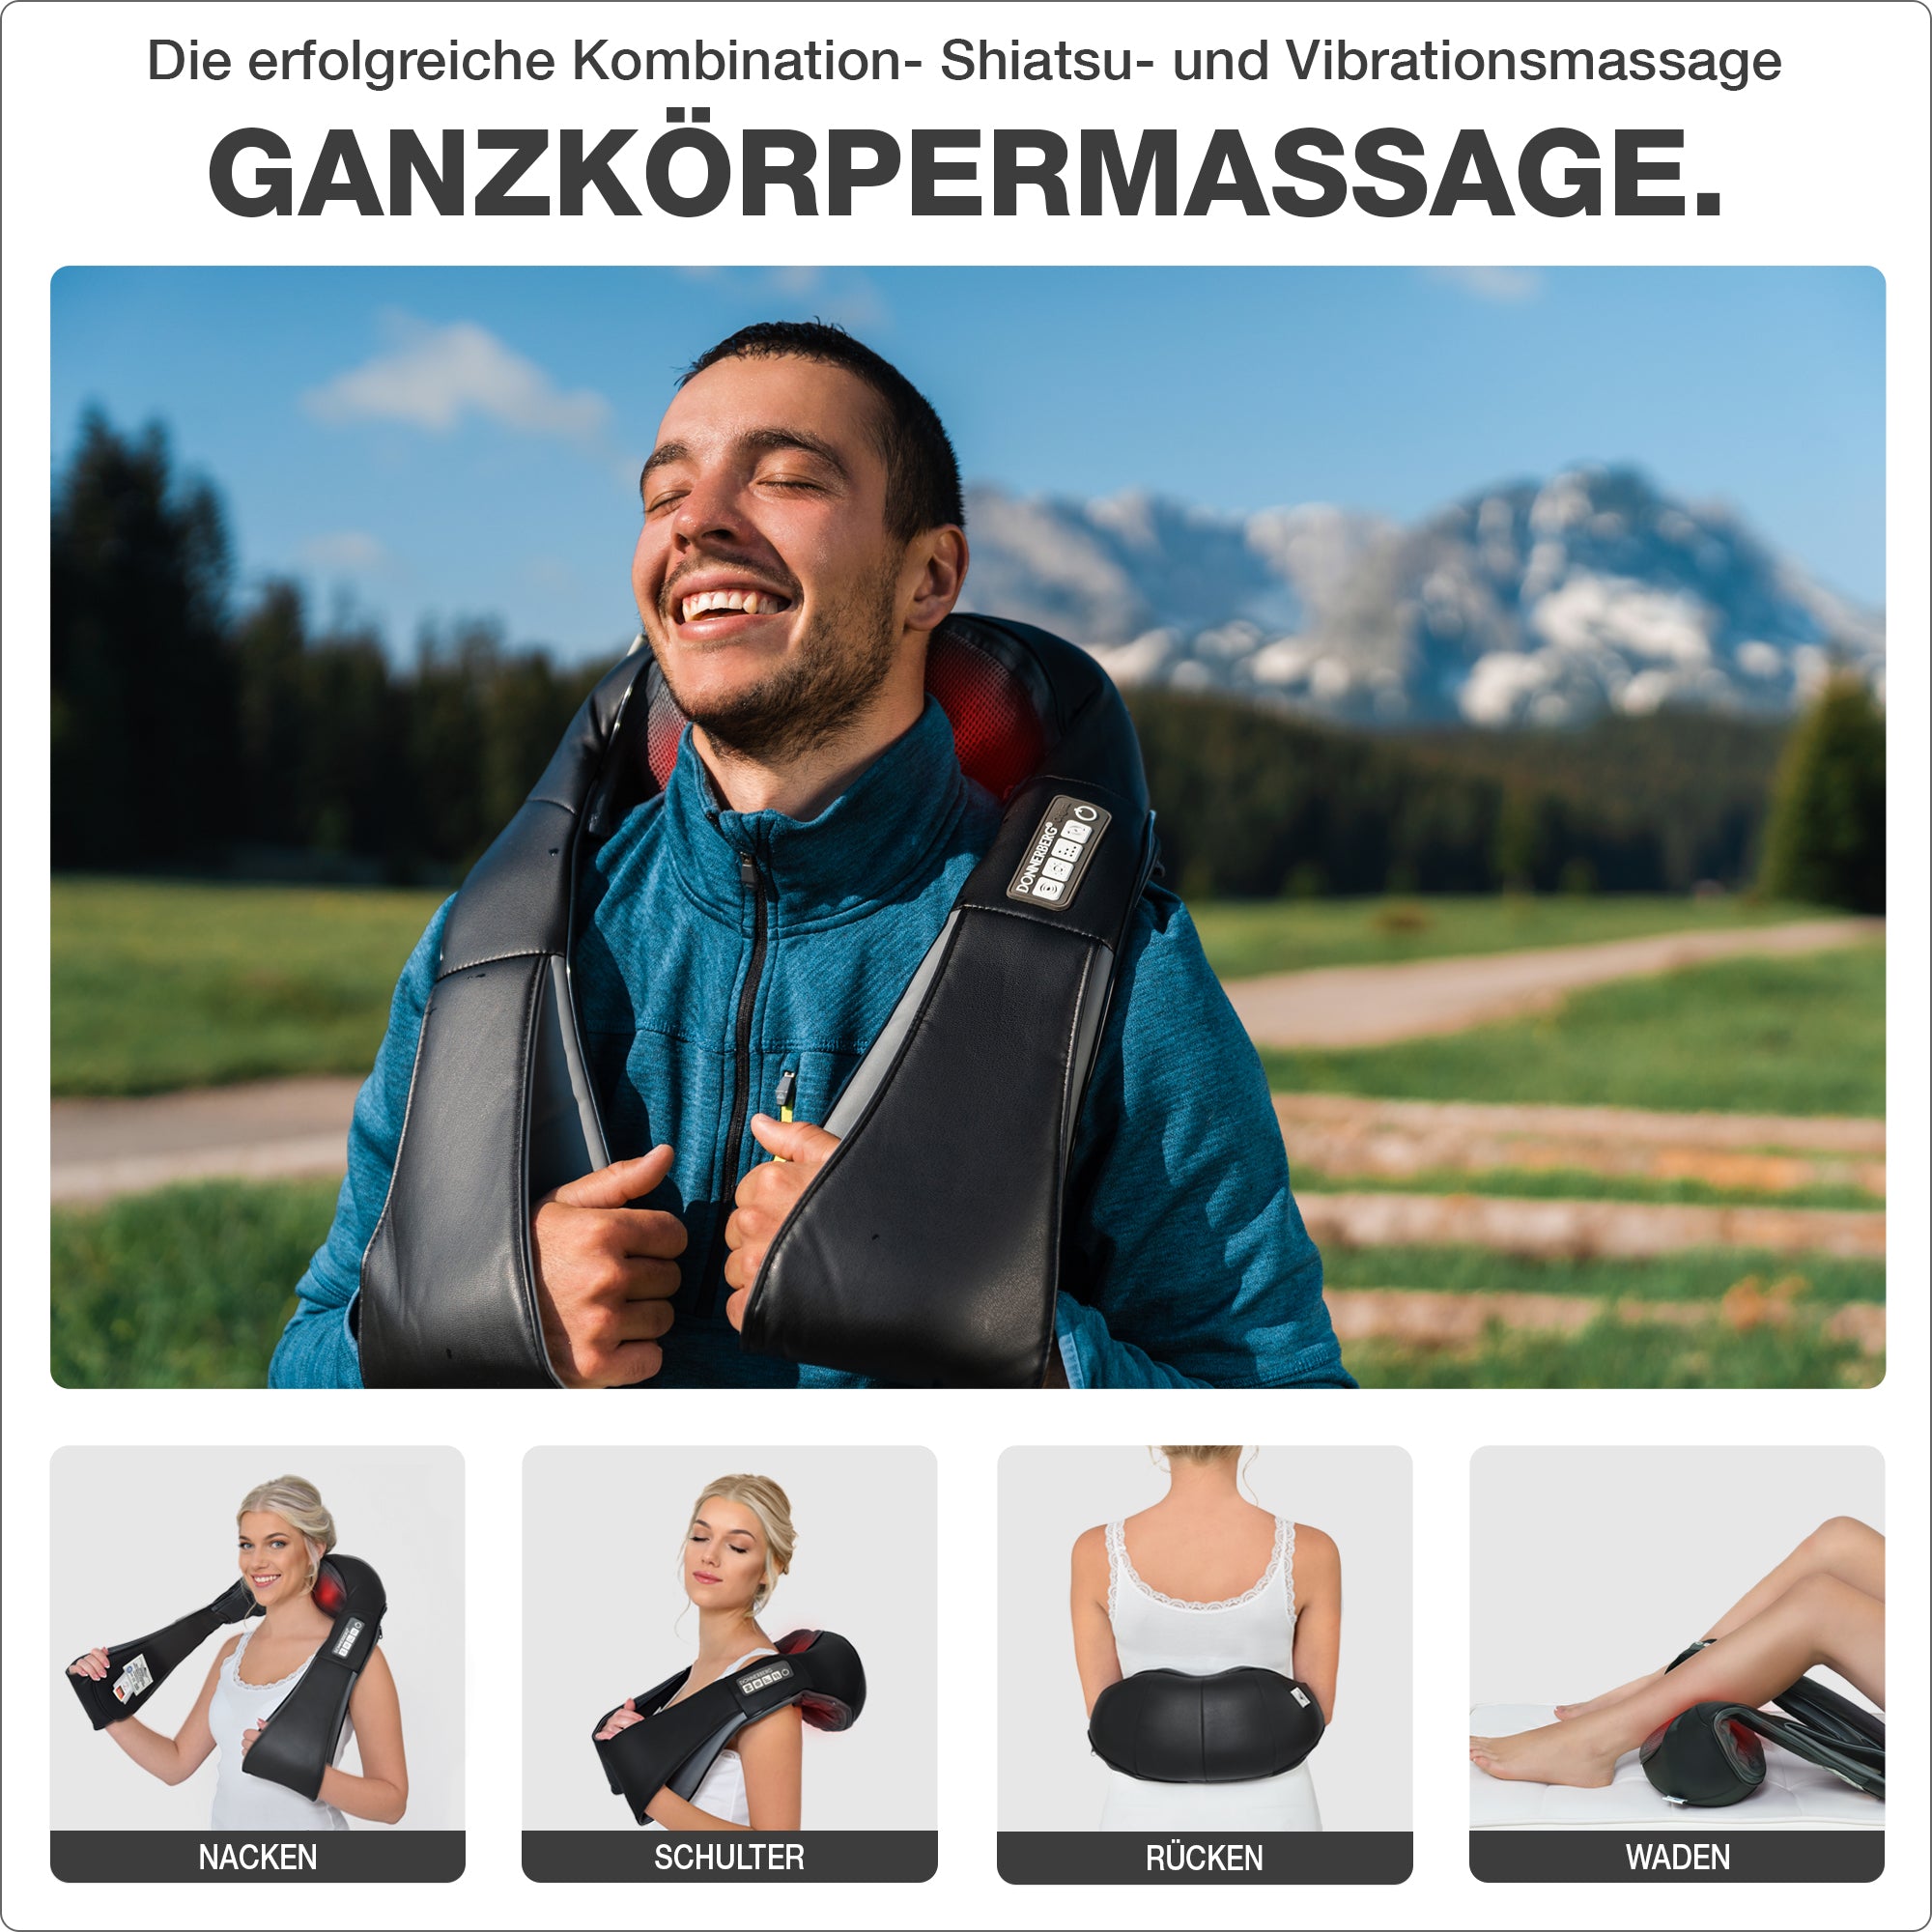 Ganzkörpermassage mit dem Akku Nackenmassagegerät am Nacken, Schultern, Rücken, Waden.